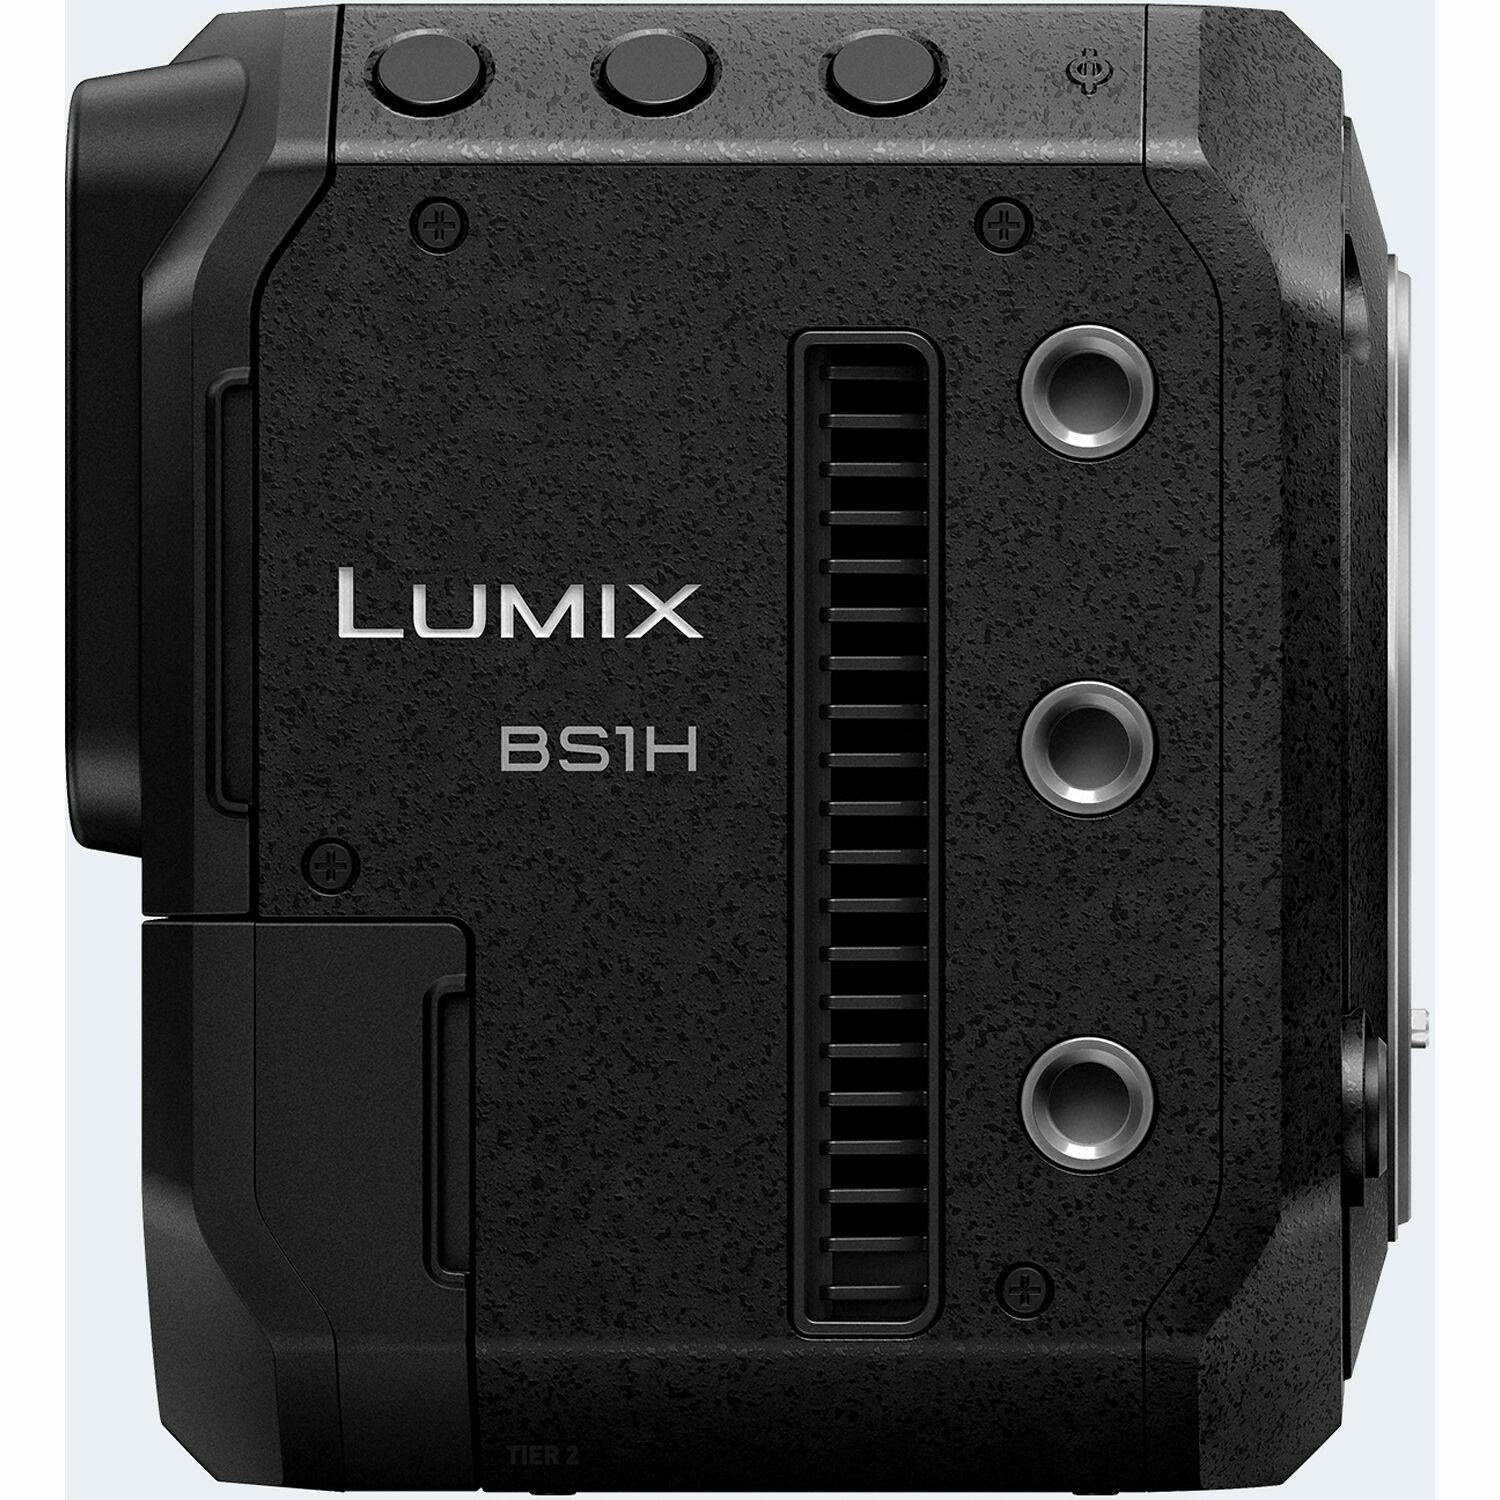 Panasonic Lumix BS1H Body (DC-BS1HE)